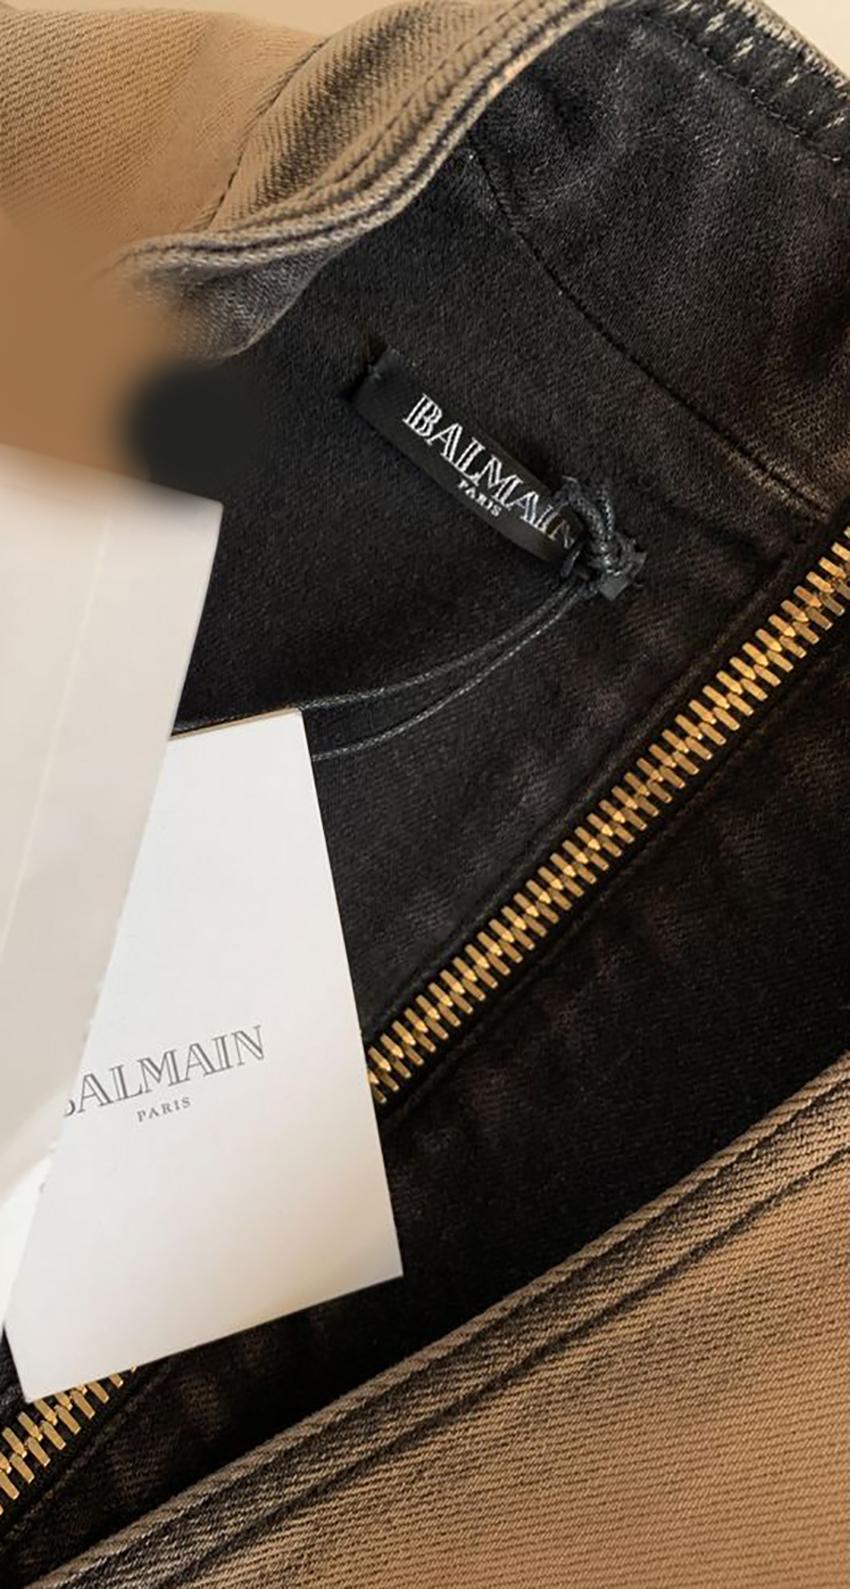 Balmain Jeans Beige Button Up Dress with Gold Tone Lion Buttons  EU 42 1